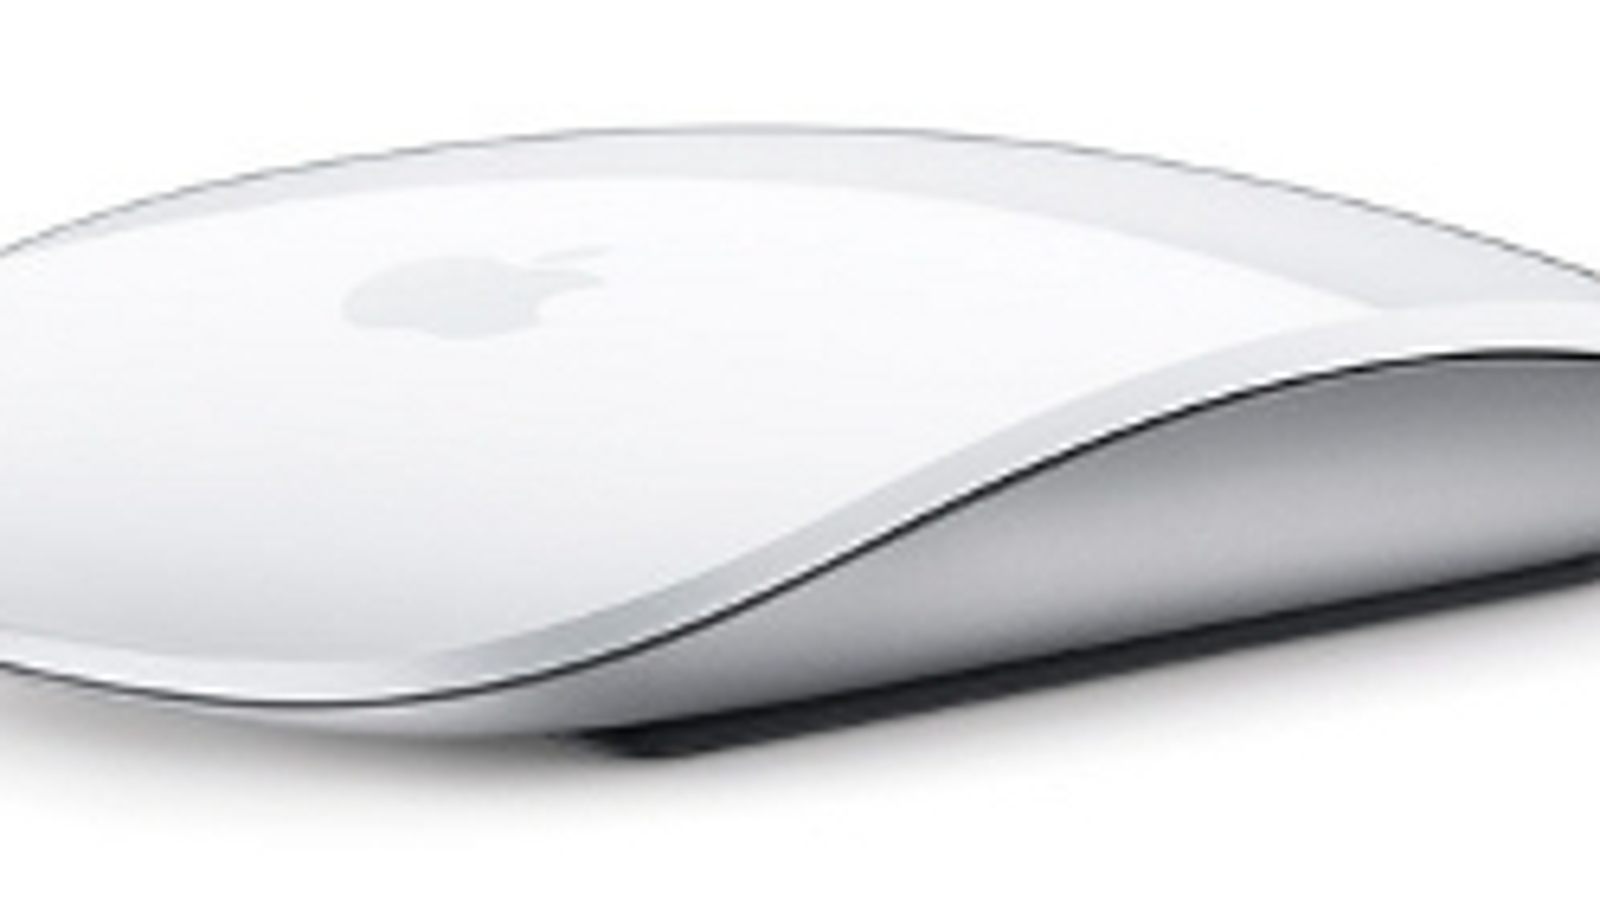 use apple magic mouse with windows 10